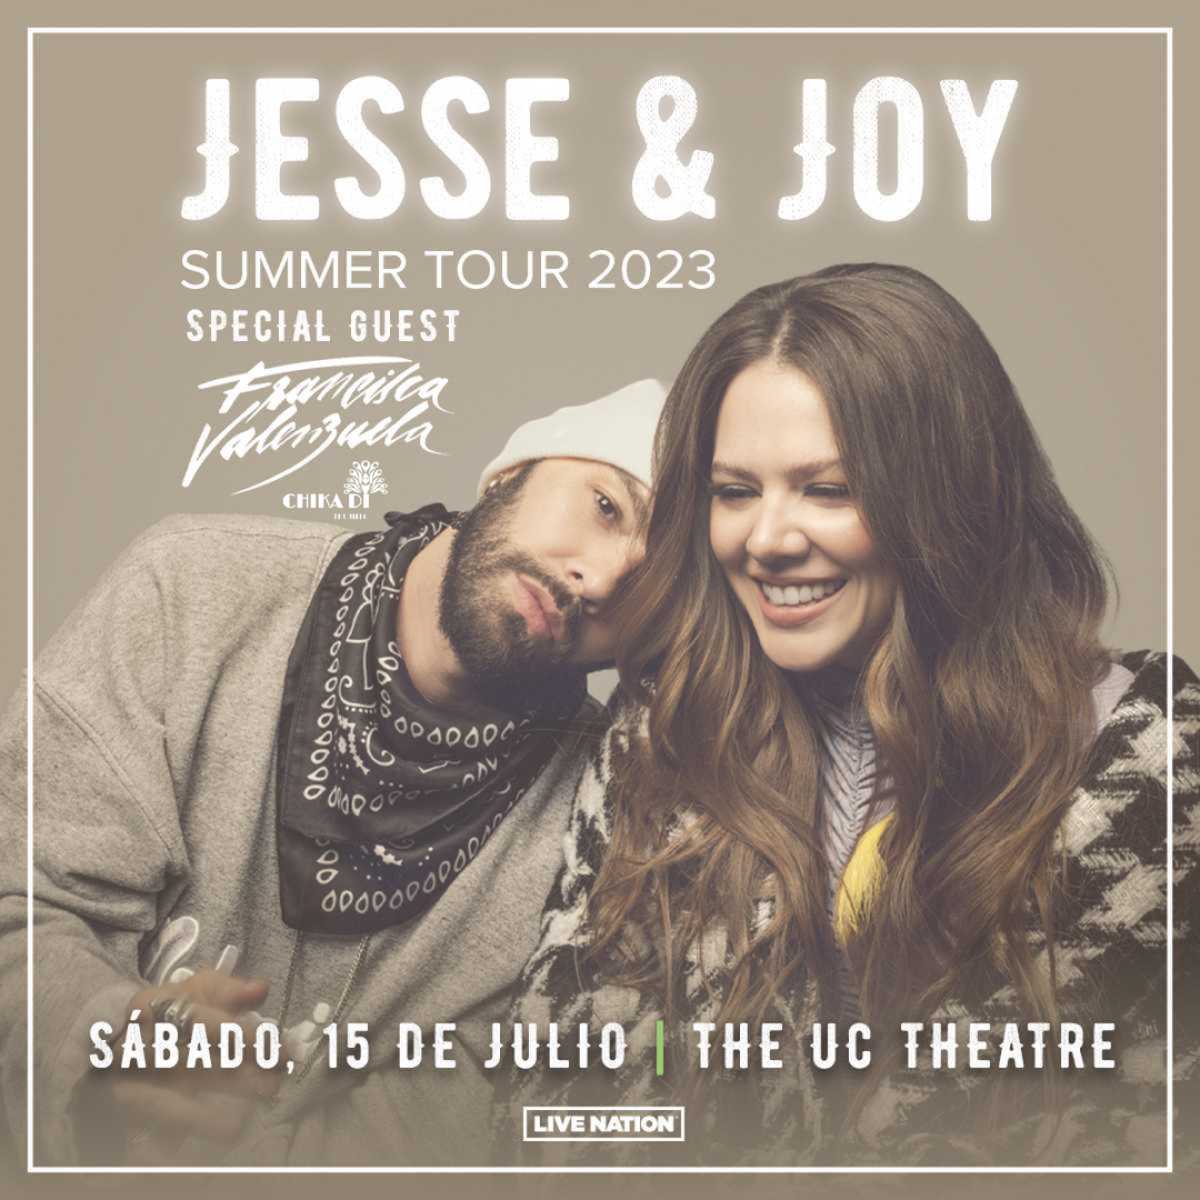 Jesse & Joy Summer Tour 2023 